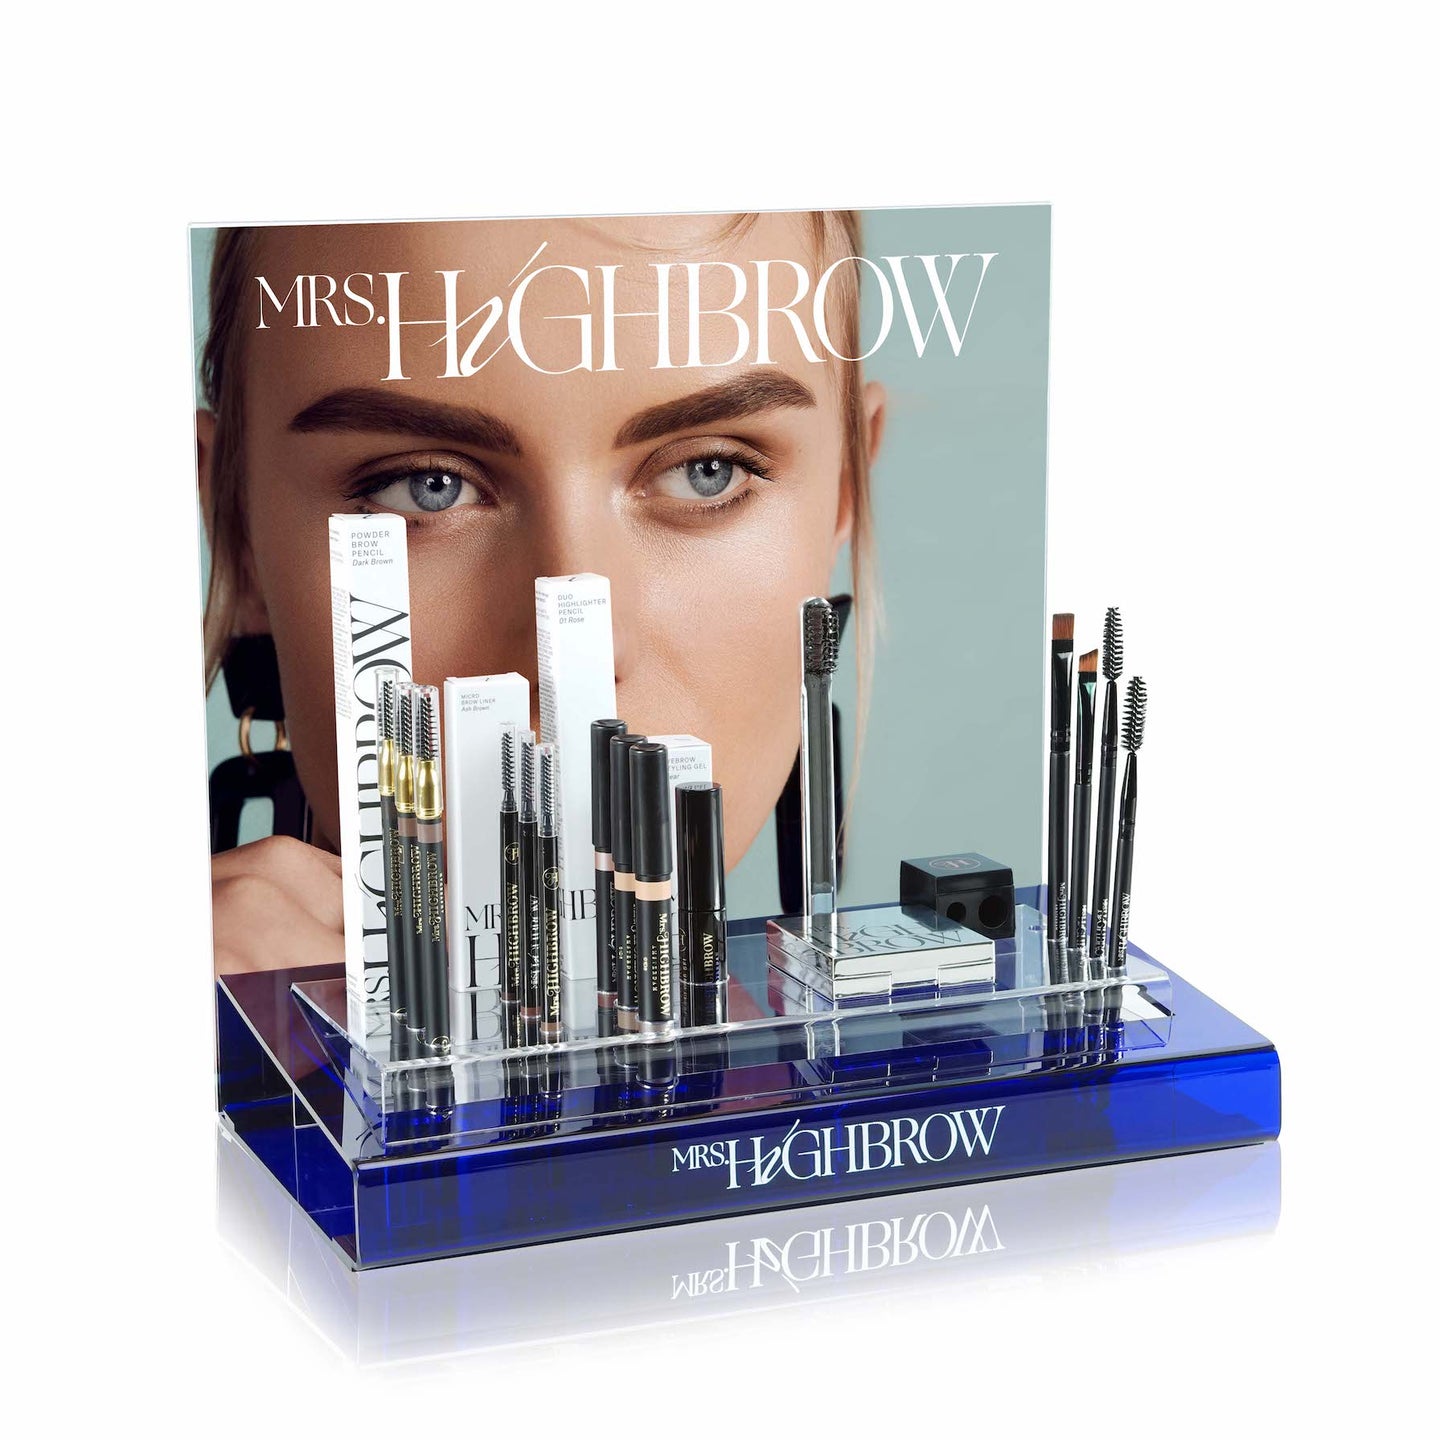 Mrs.Highbrow Counter Make-Up Display - Mrs.Highbrow Professional